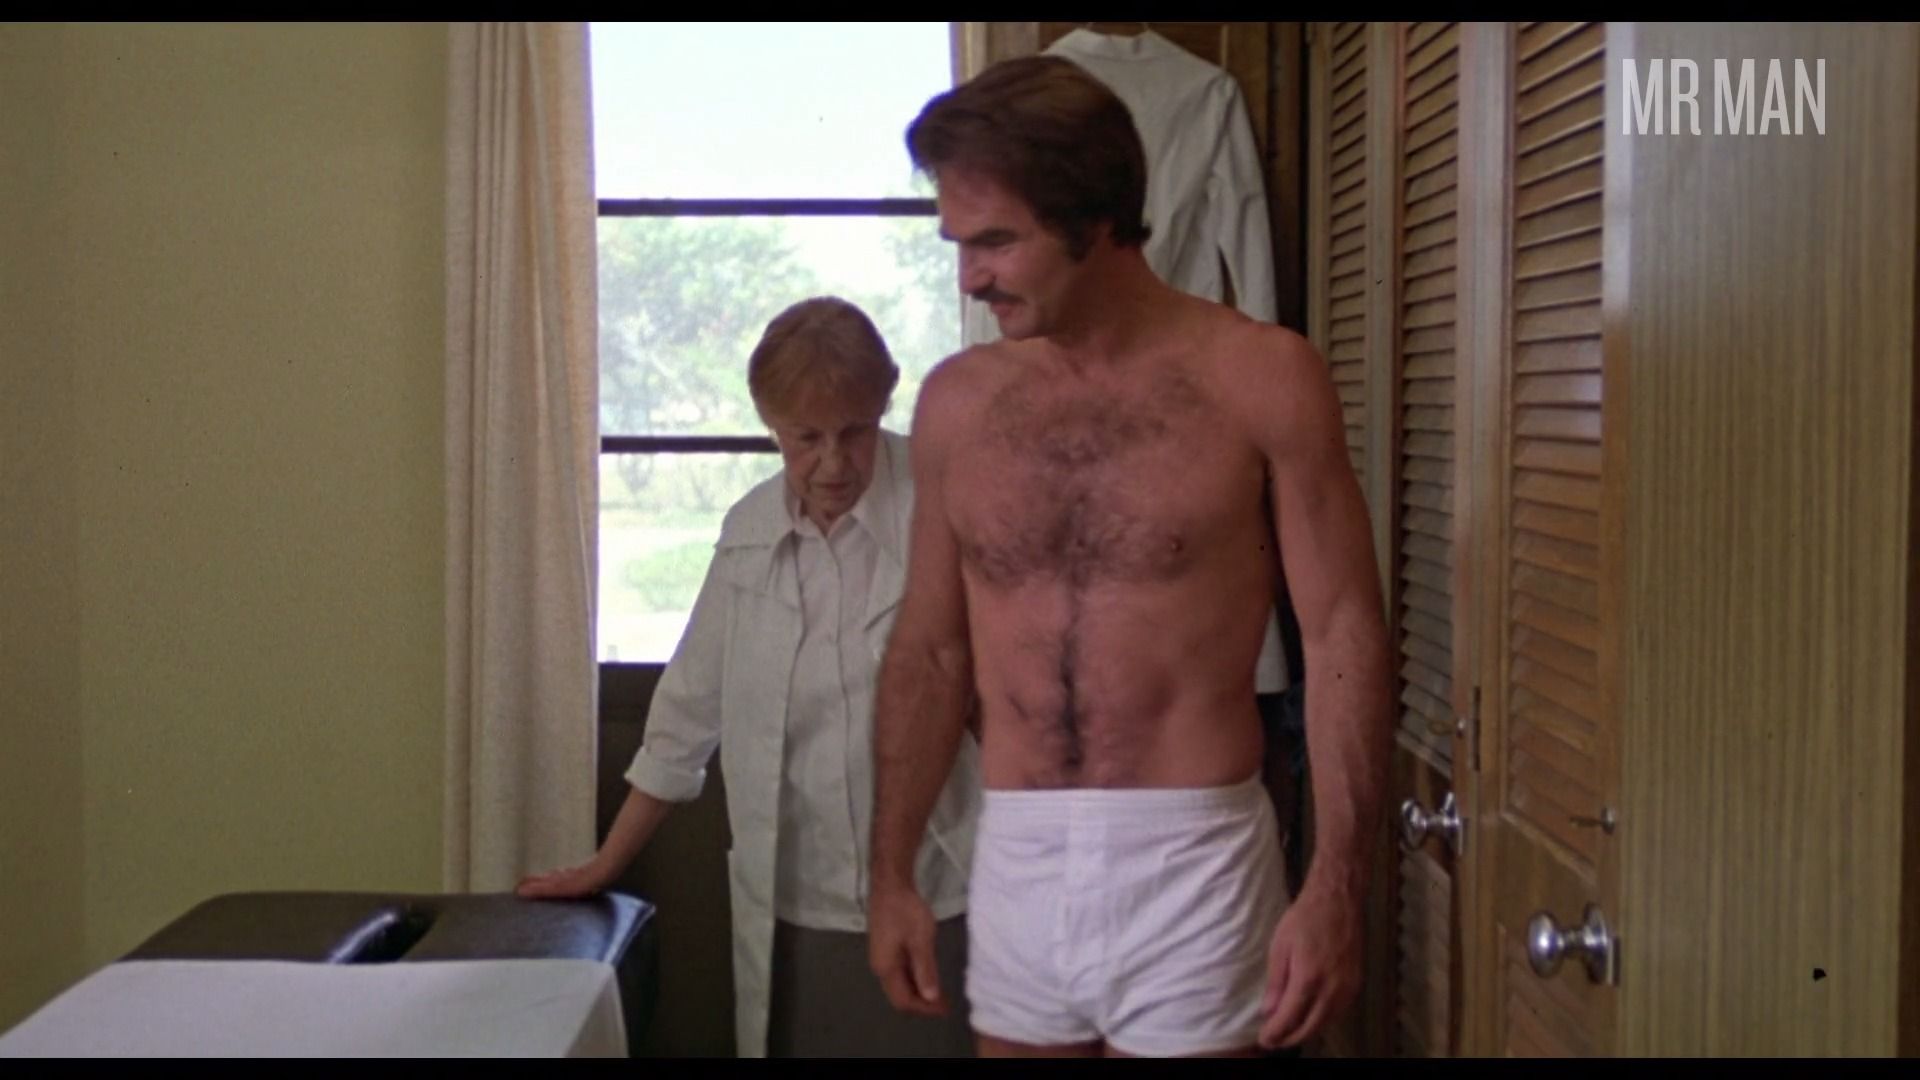 Sexy Nude Burt Reynolds Pics & Movie Scenes at Mr. Man